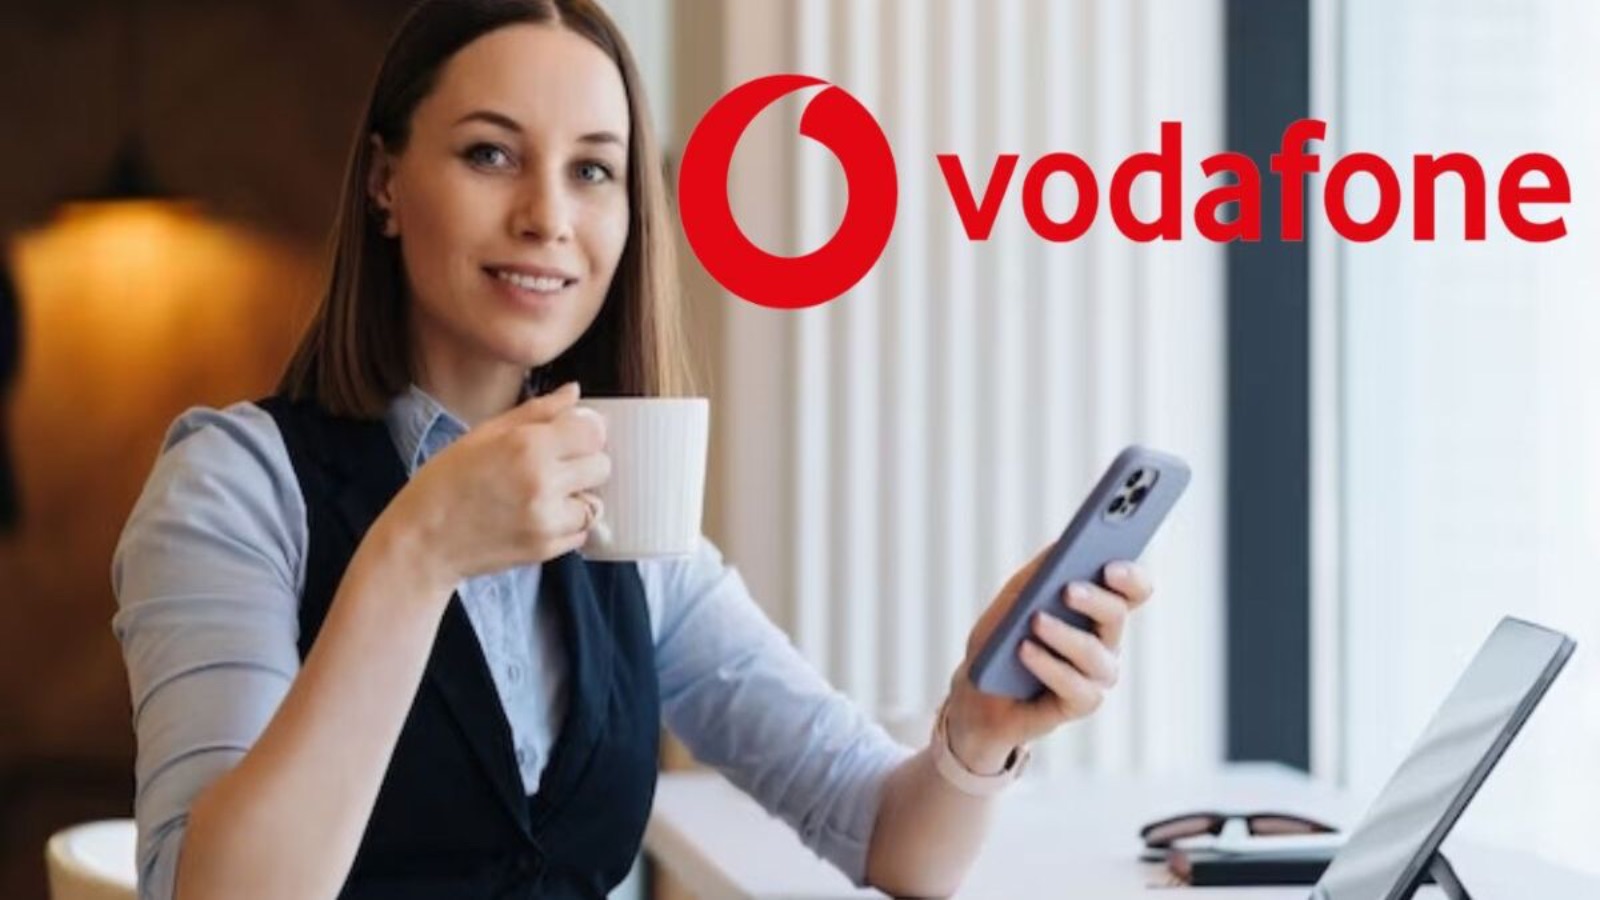 Vodafone, due PROMO Silver con 7 EURO al mese 